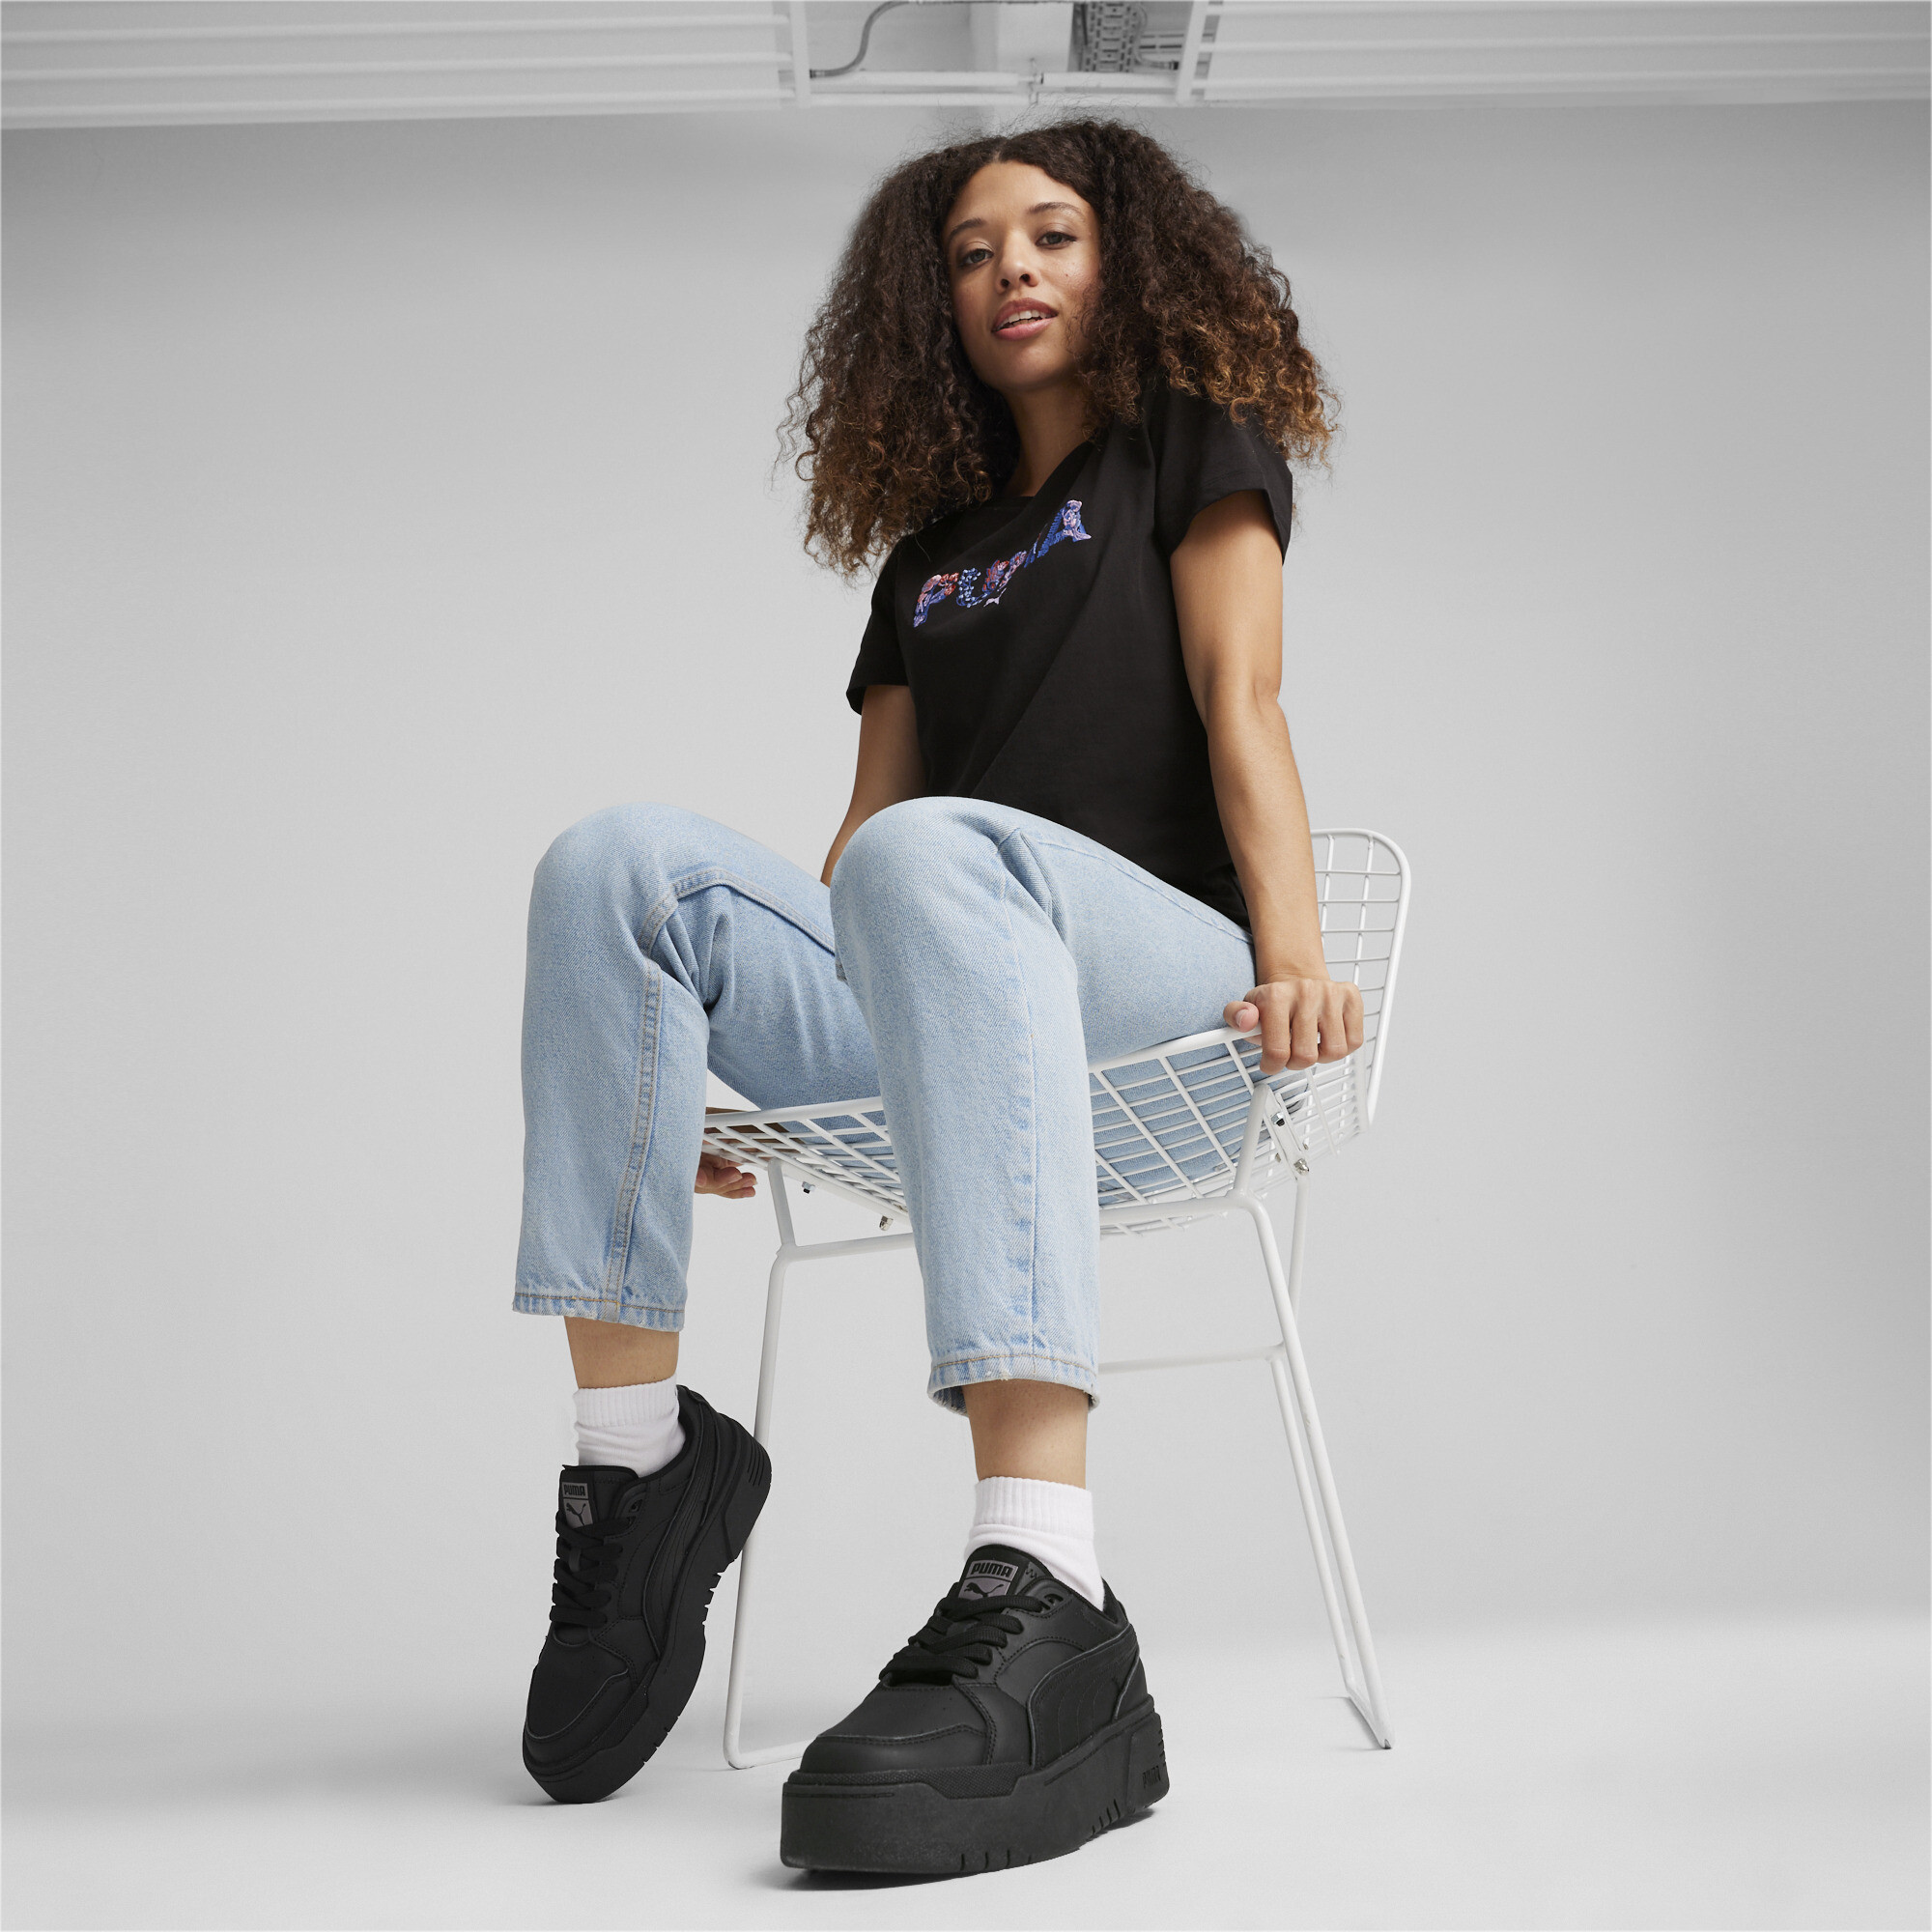 Women's Puma CA. Flyz's Sneakers, Black, Size 38.5, Shoes